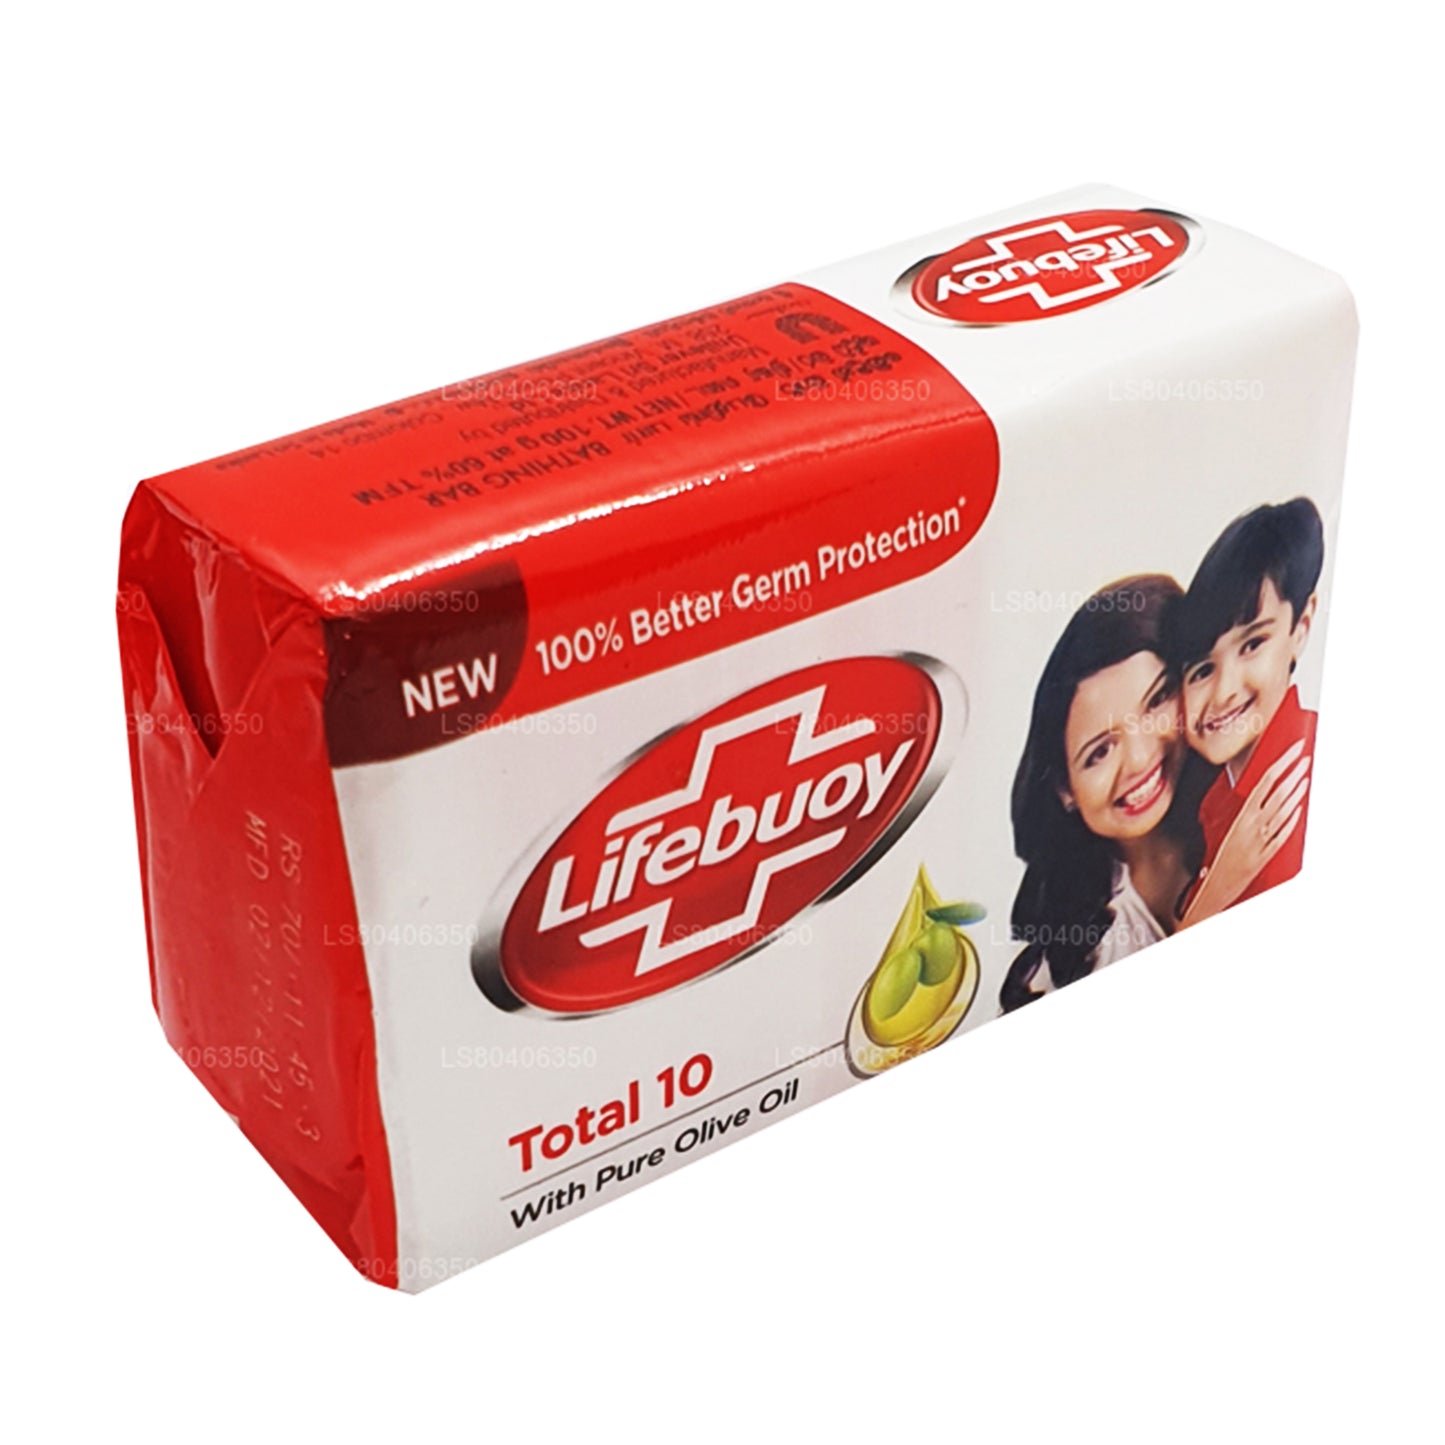 Lifebuoy Total 10 met pure olijfolie lichaamszeep (100 g)